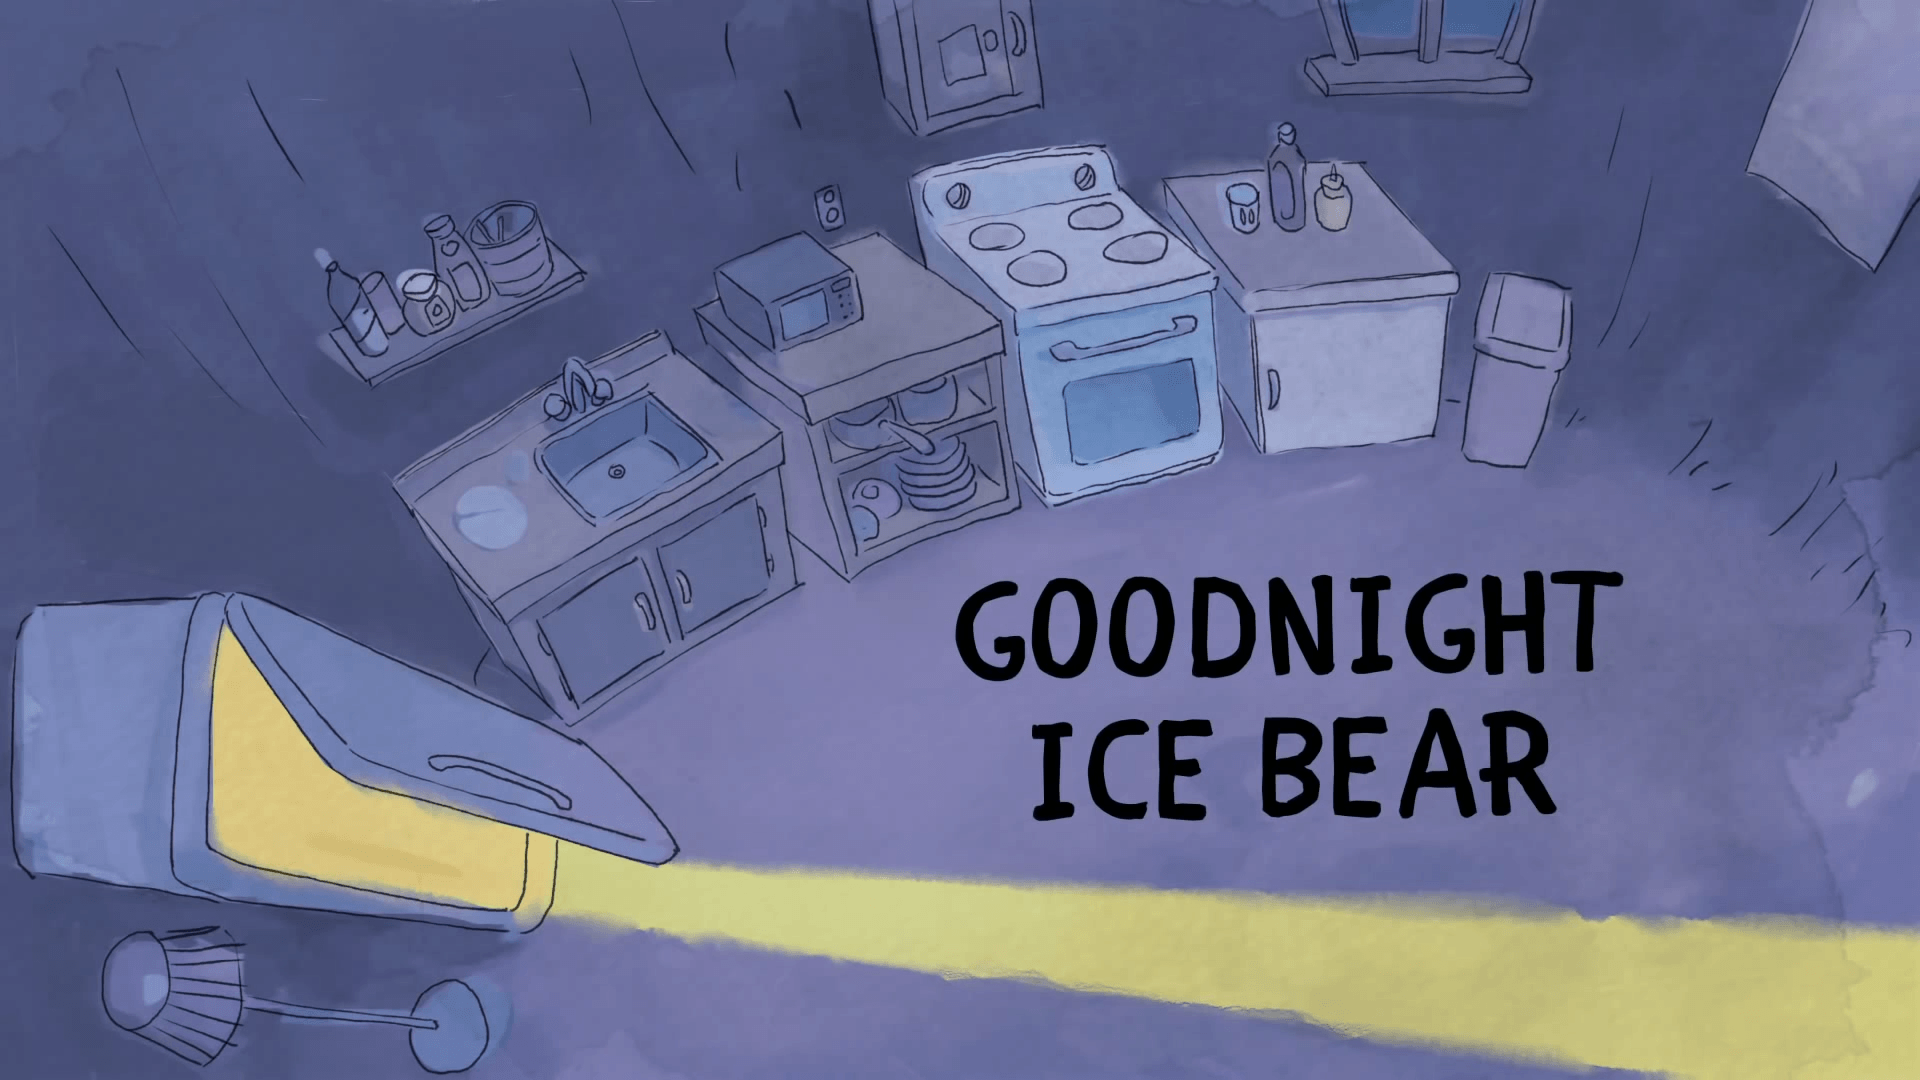 Goodnight Ice Bear. We Bare Bears